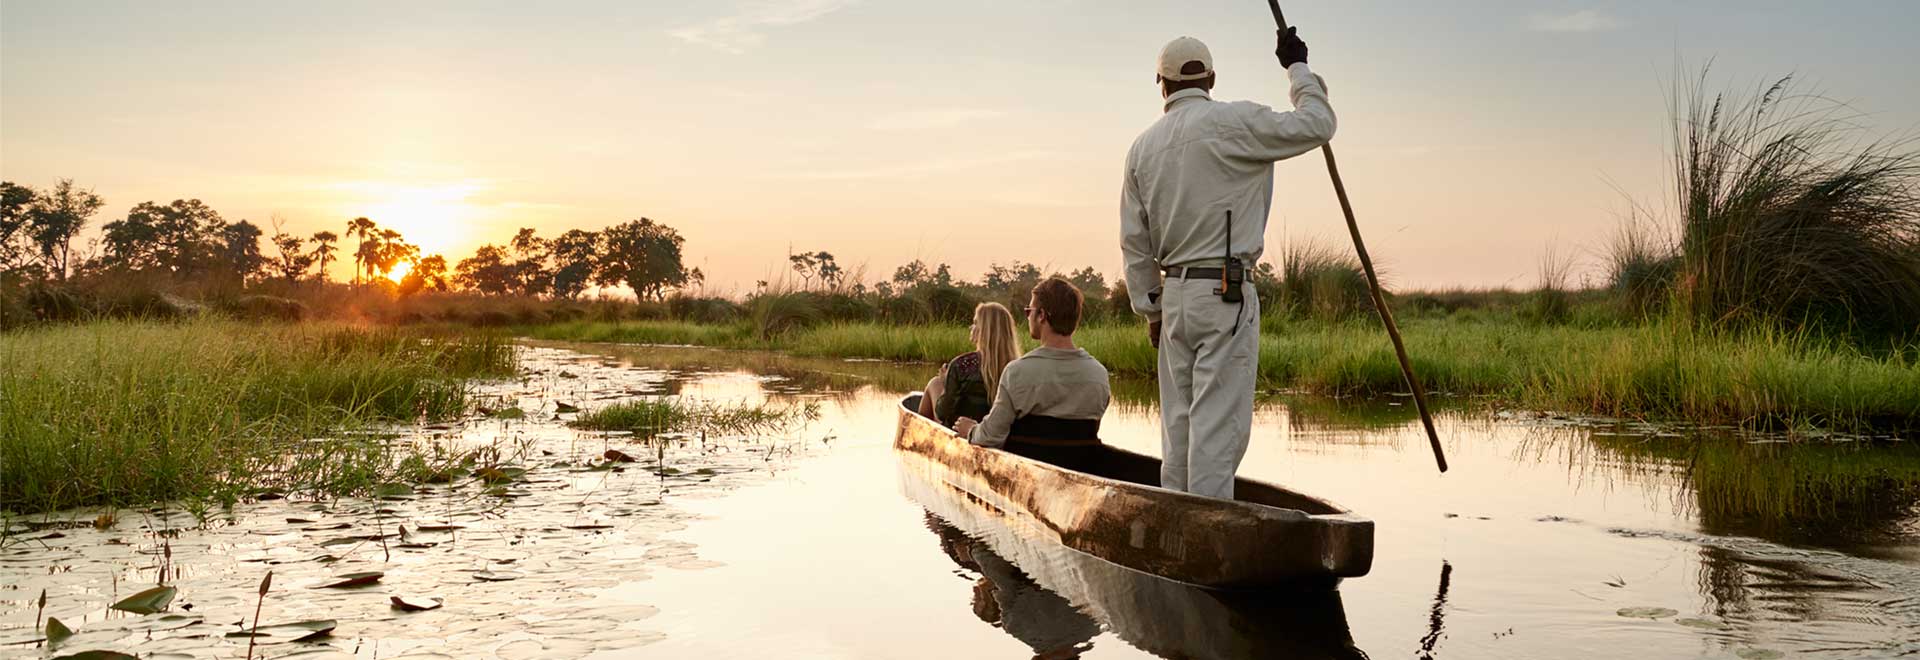 Africa Southern Africa Botswana Okavango Delta